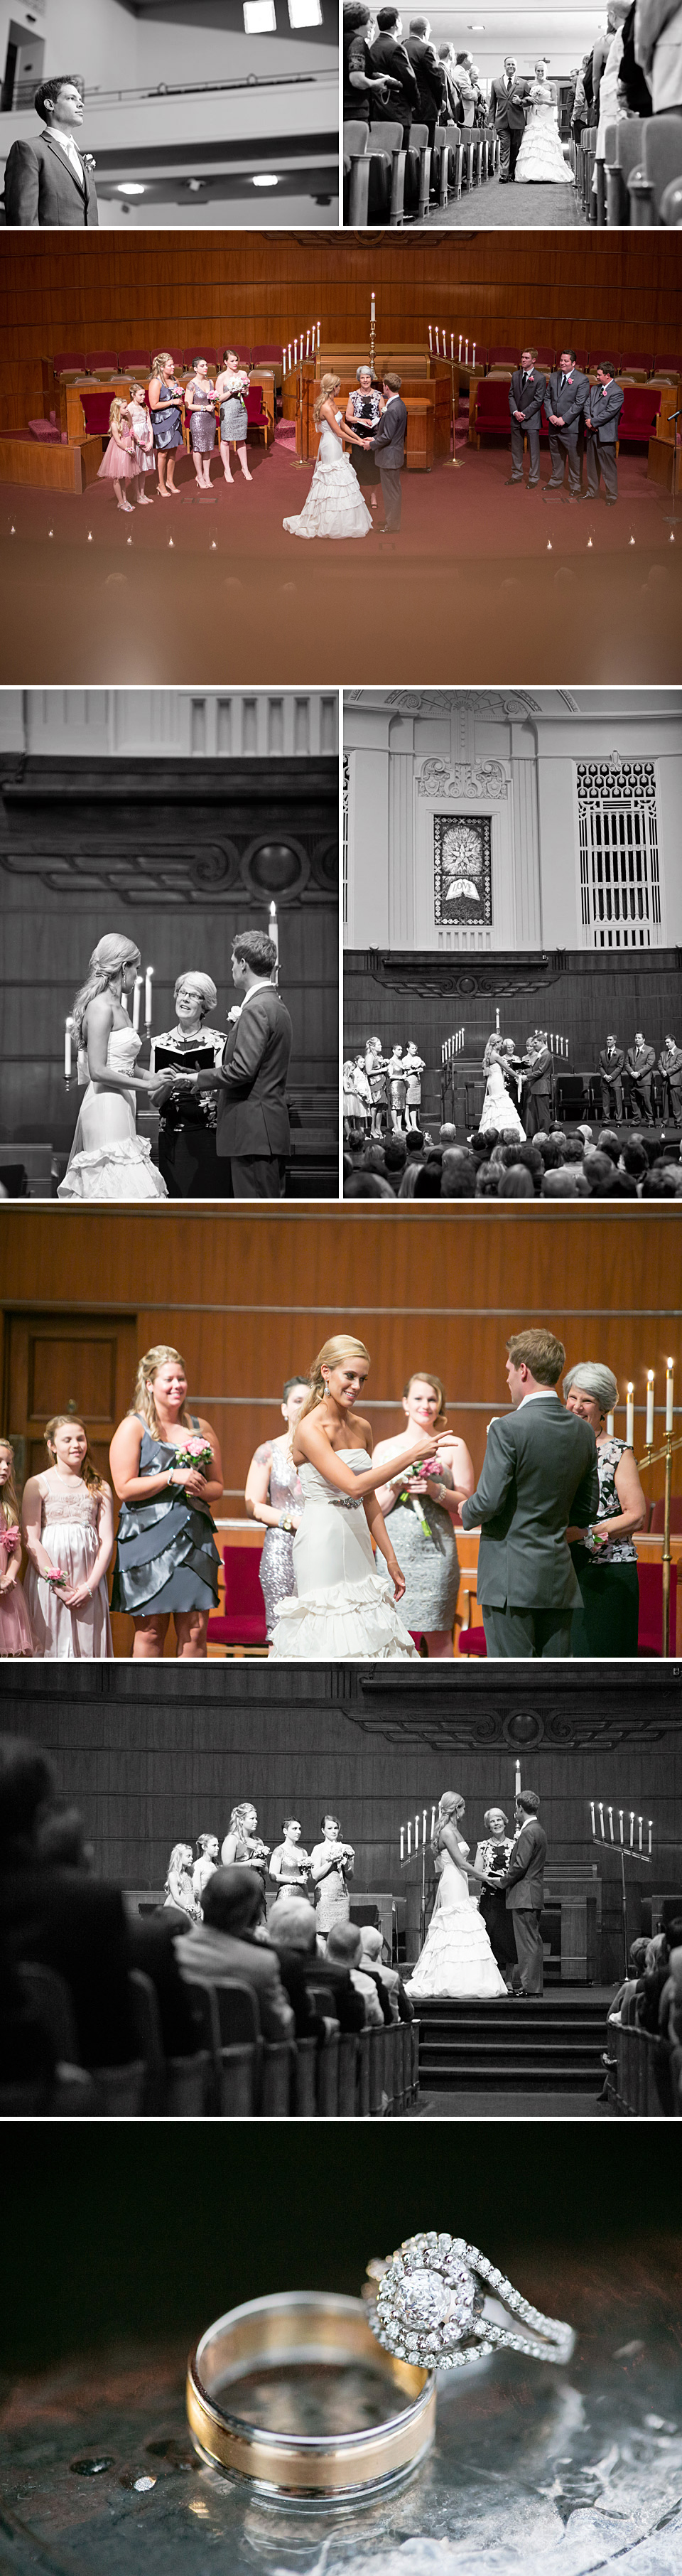 Unity Temple Plaza KC, Jana Marler, wedding ceremony, services, paper rock scissors, tears of joy